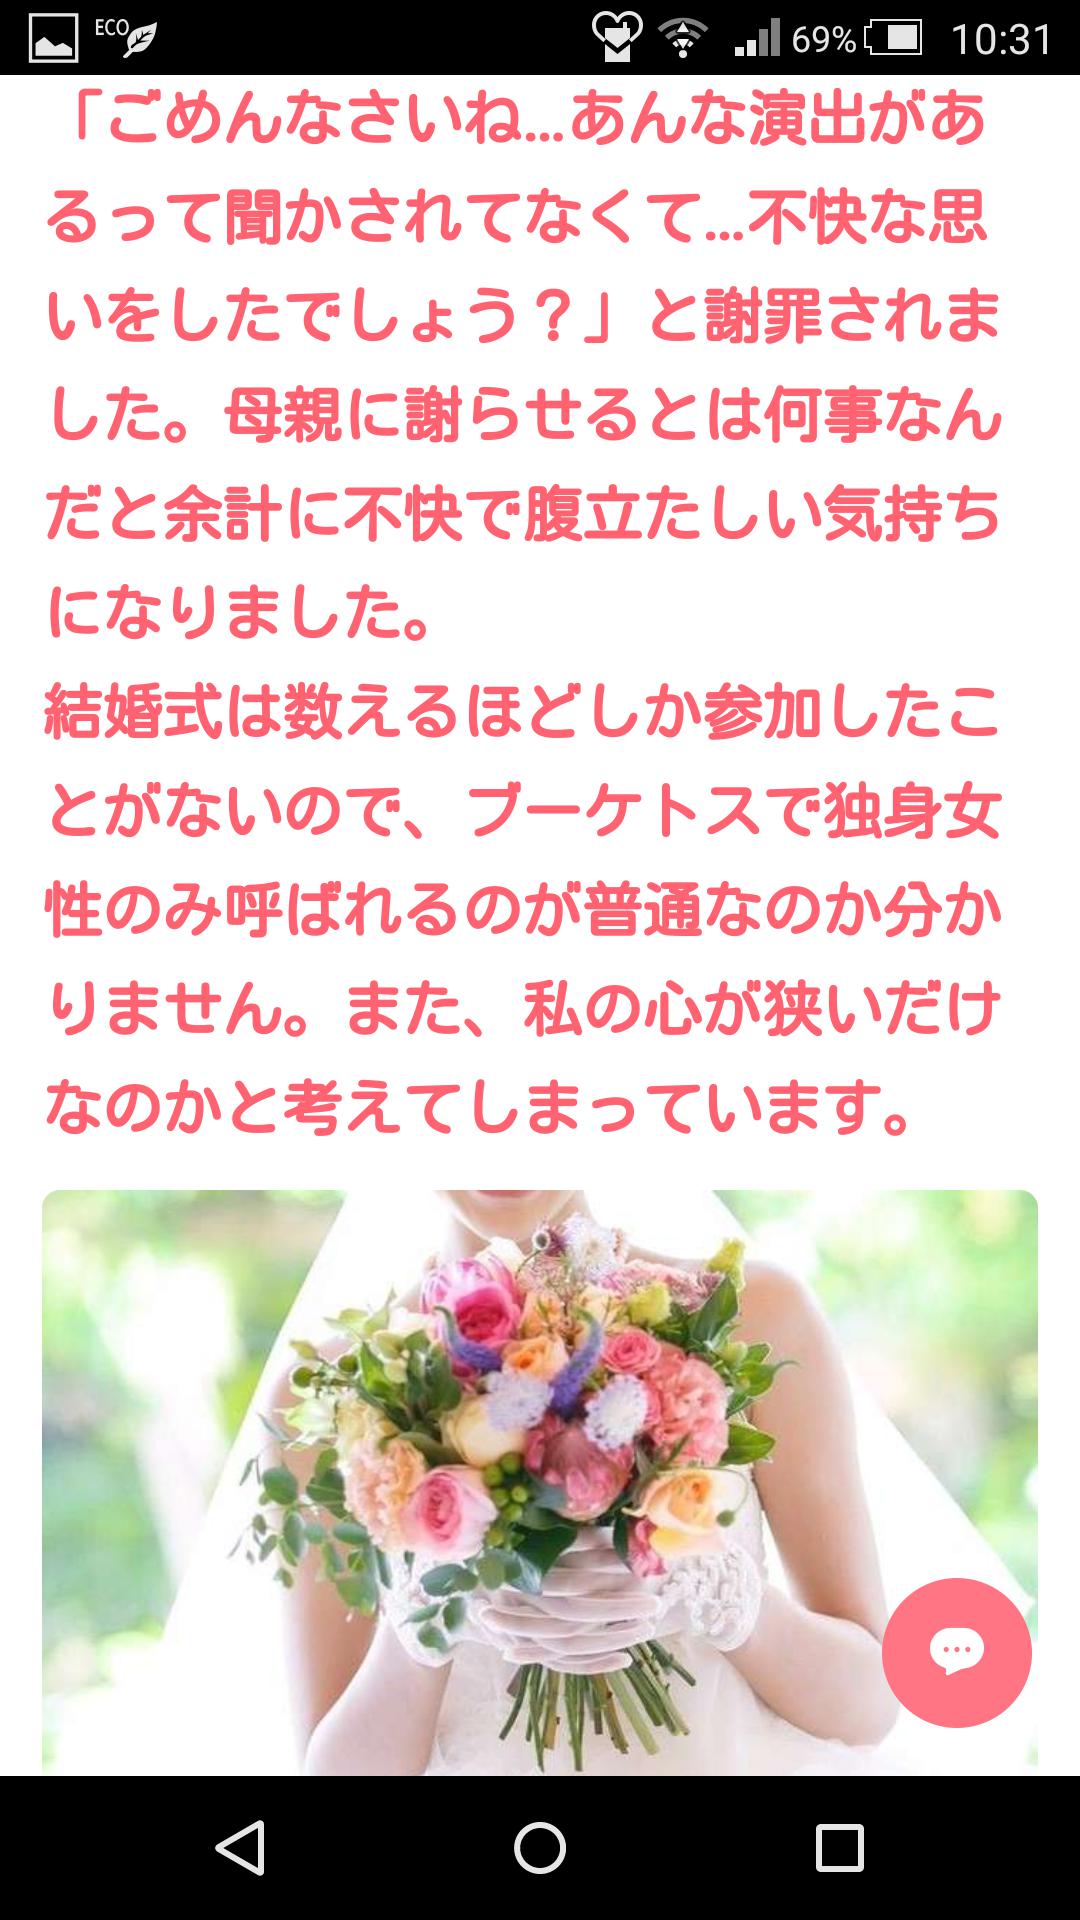 [Sad news] Single women, wedding bouquets cut out